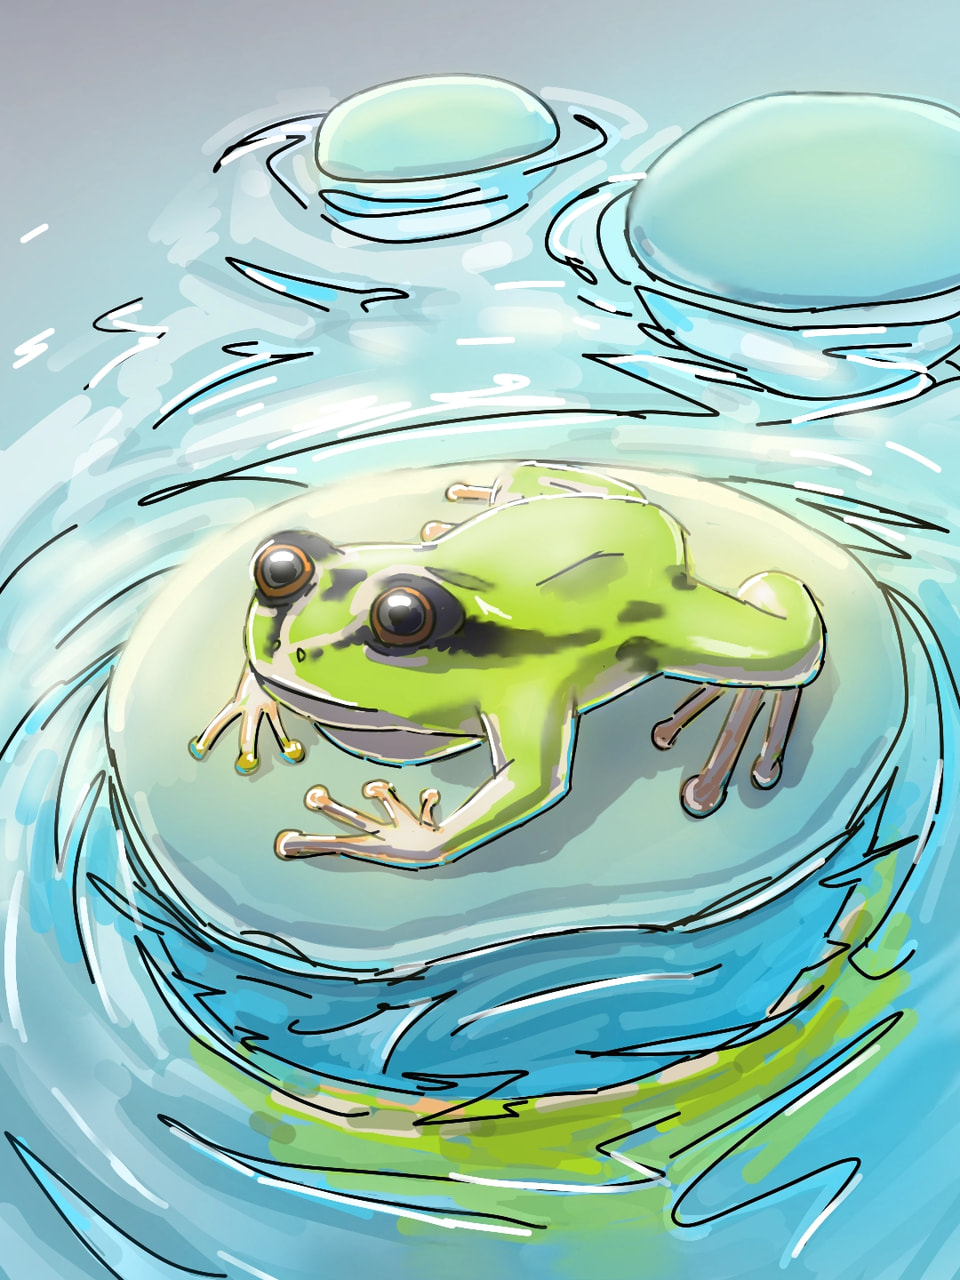 #fridaysforfuture #frydaywithsketch #frog #nature хах, нарисовал лягушонка))))